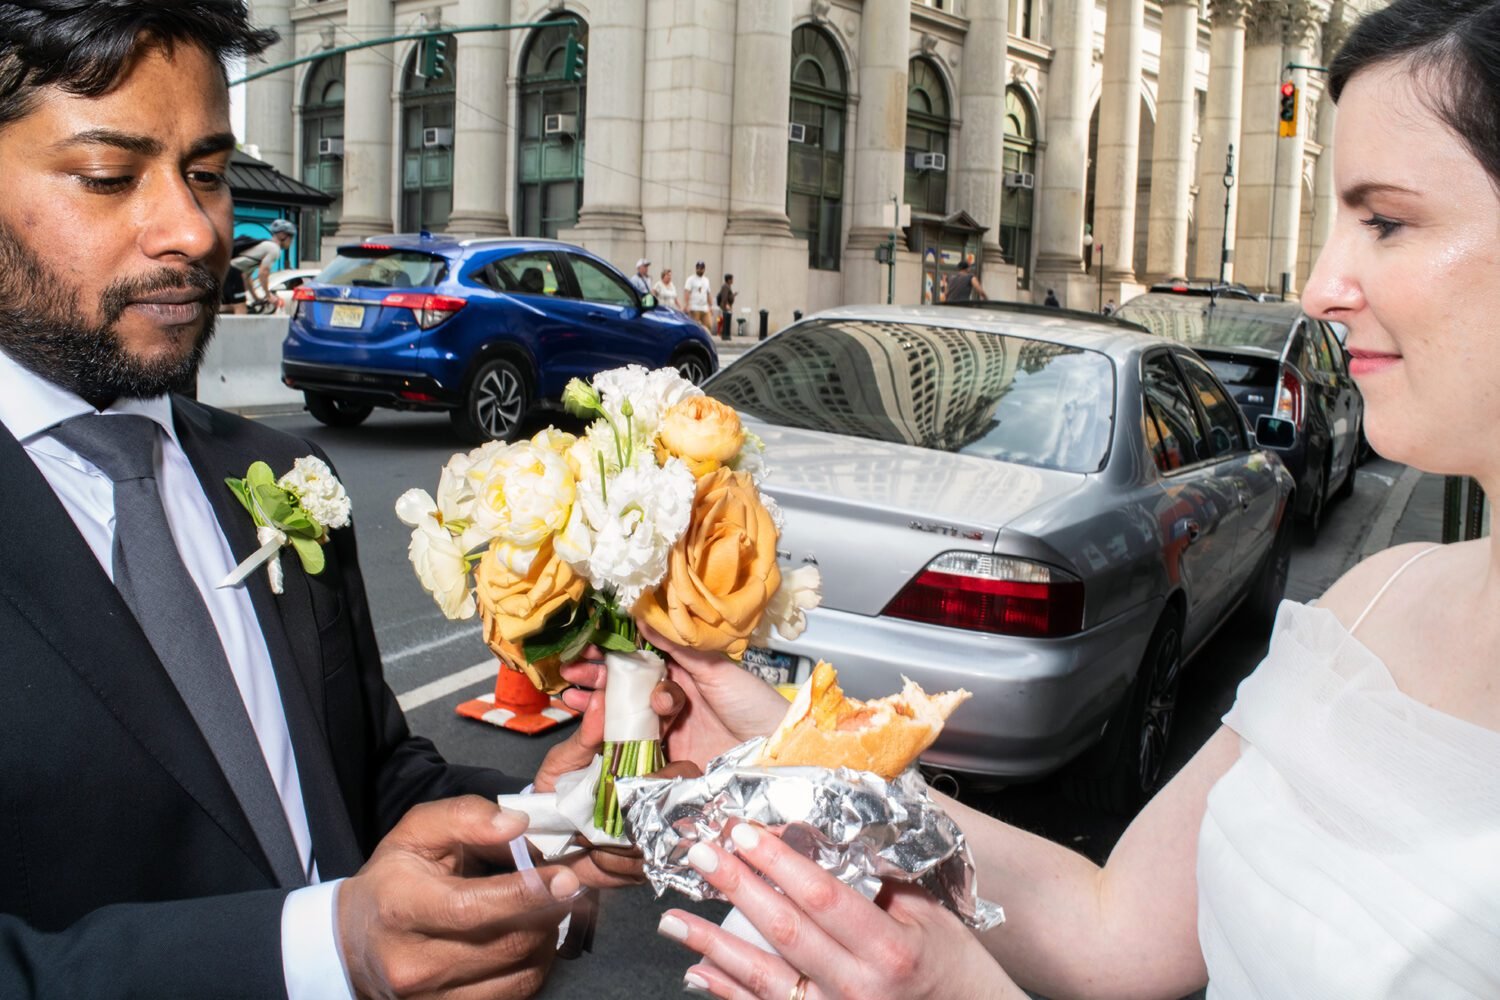 Sharing a hot dog. NYC Bangledesh wedding NYC City Hall shot by documentary style wedding photographer Angela Cappetta.